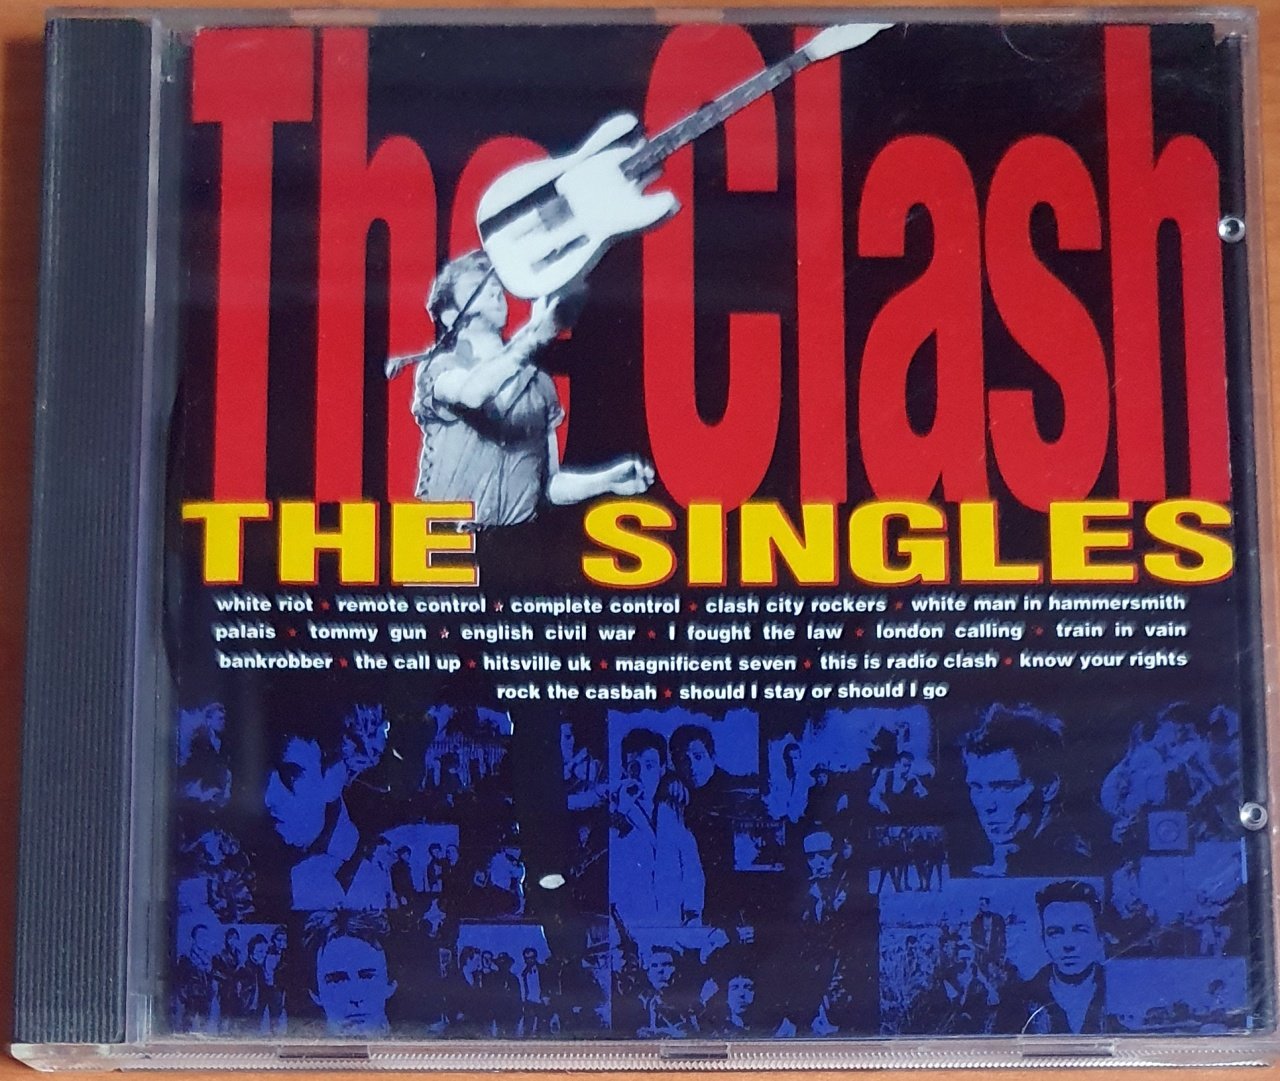 THE CLASH - THE SINGLES (1991) - CD 2.EL